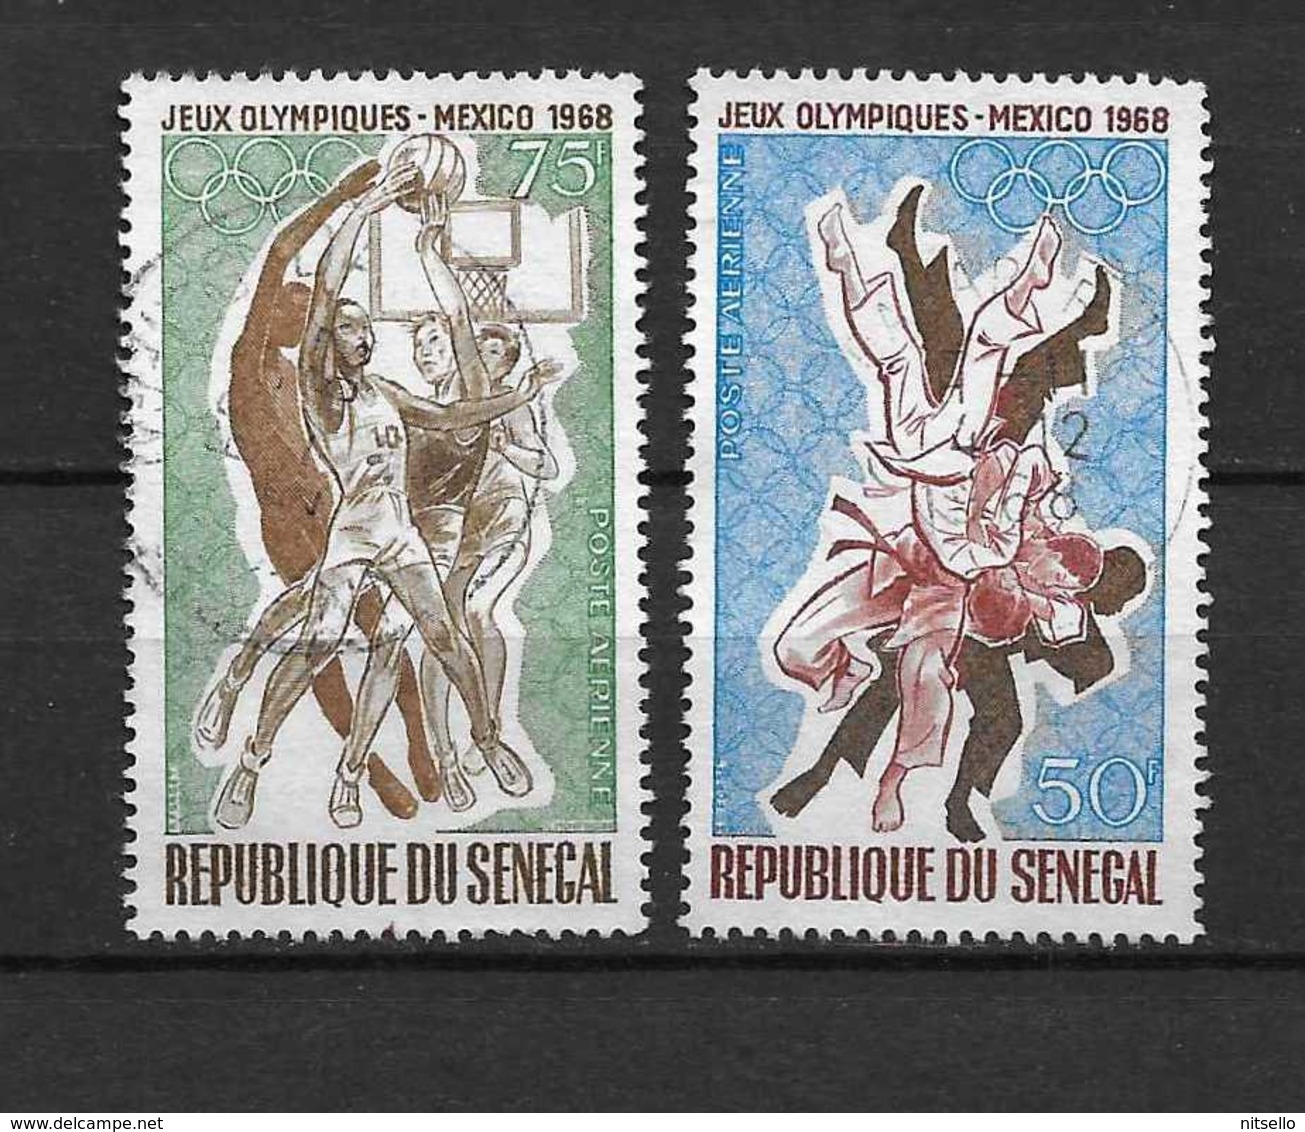 LOTE 1718  ///  SENEGAL     ¡¡¡¡ LIQUIDATION !!!! - Senegal (1960-...)